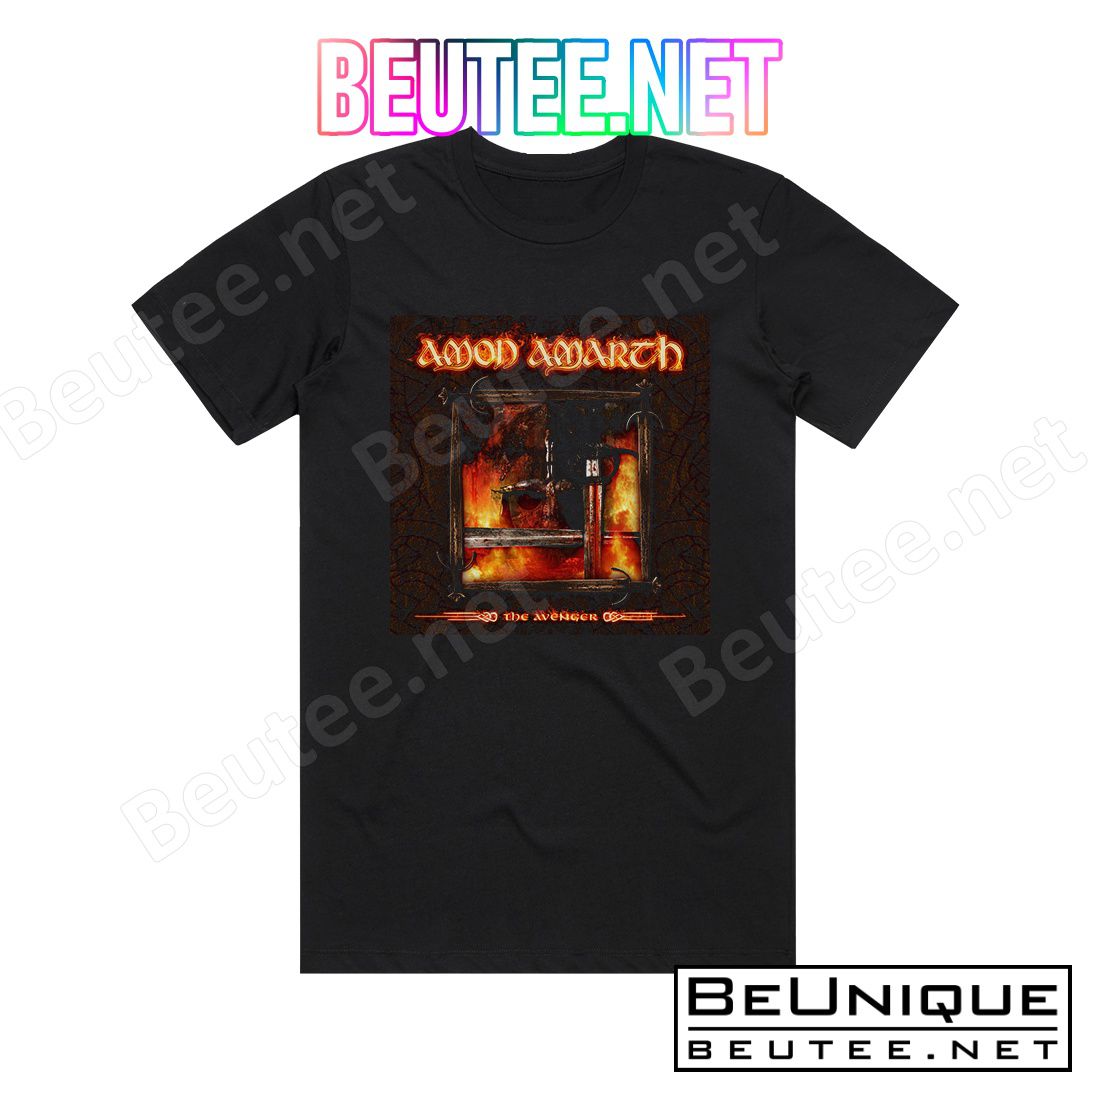 Amon Amarth The Avenger 1 Album Cover T-Shirt